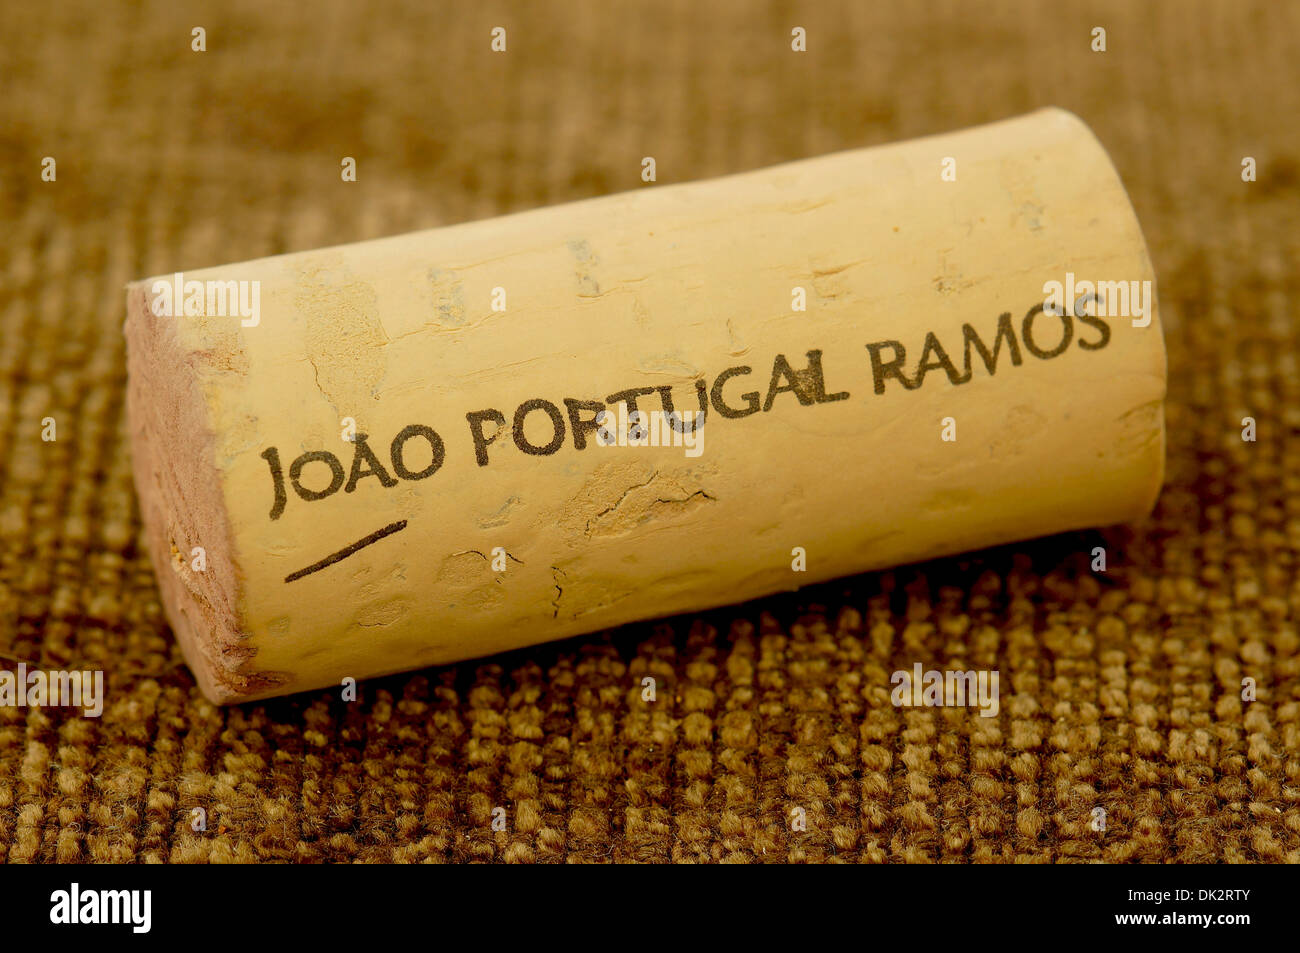 Joao Portugal Ramos portugese winemaker wine cork stopper Stock Photo